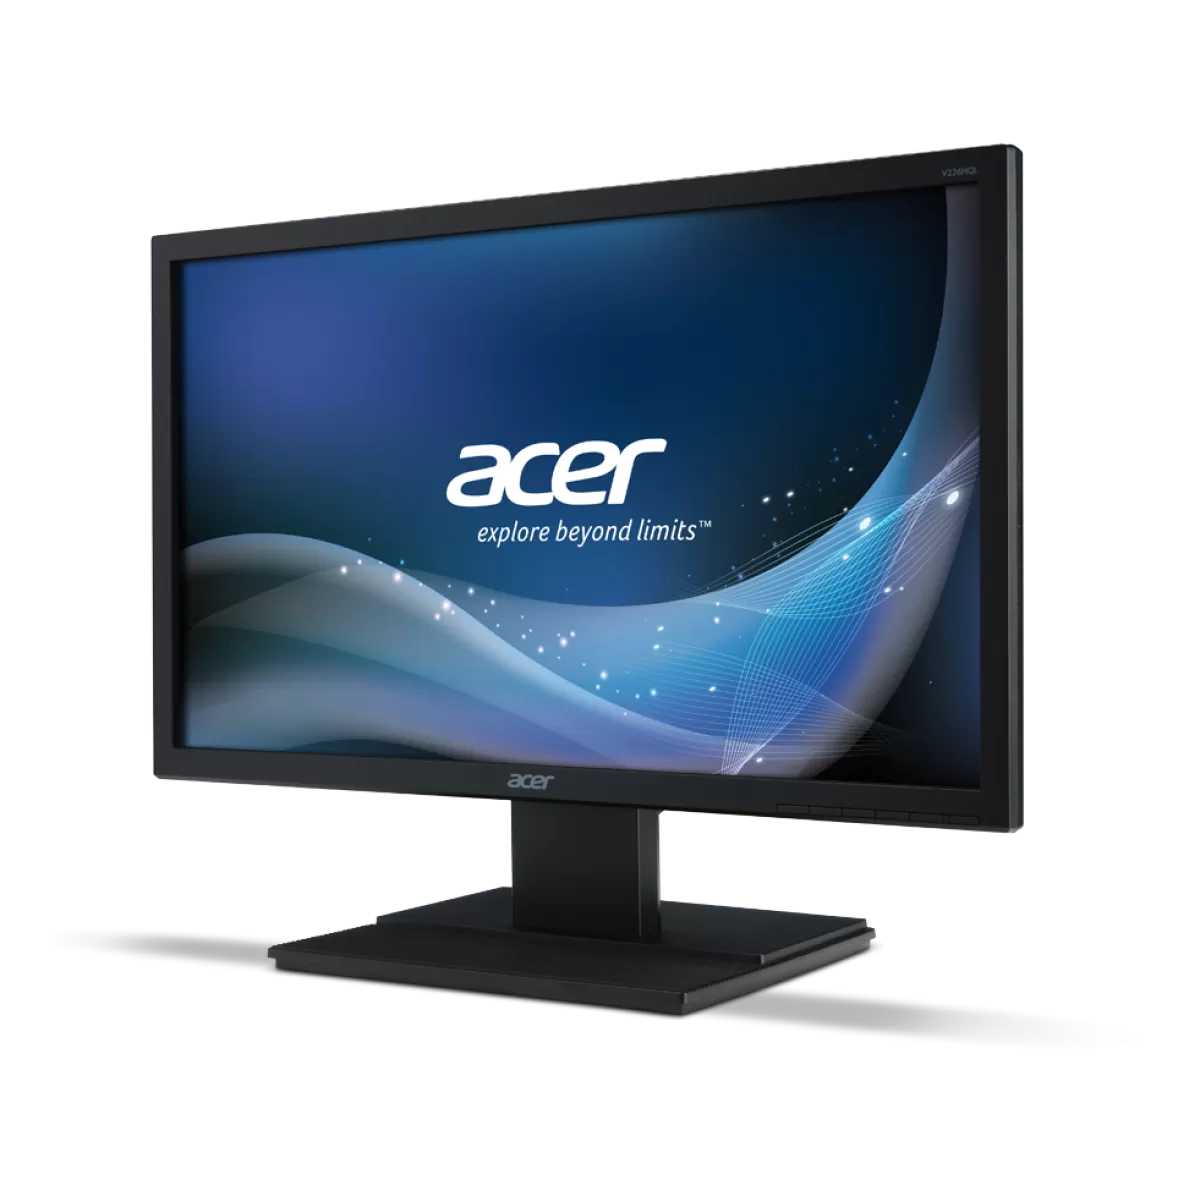 Монитор Monitor Acer V226HQLbd, LED, 21.5 (55 cm), Format: 16:9, Resolution: Full HD (1920х1080), Response time: 5 ms, Contrast: 100M:1, Brightness: 250 cd/m2, Viewing Angle: 170/160, VGA, DVI, Energy Star 6.0, Acer ComfyView, Acer EcoDisplay, Acer eColor